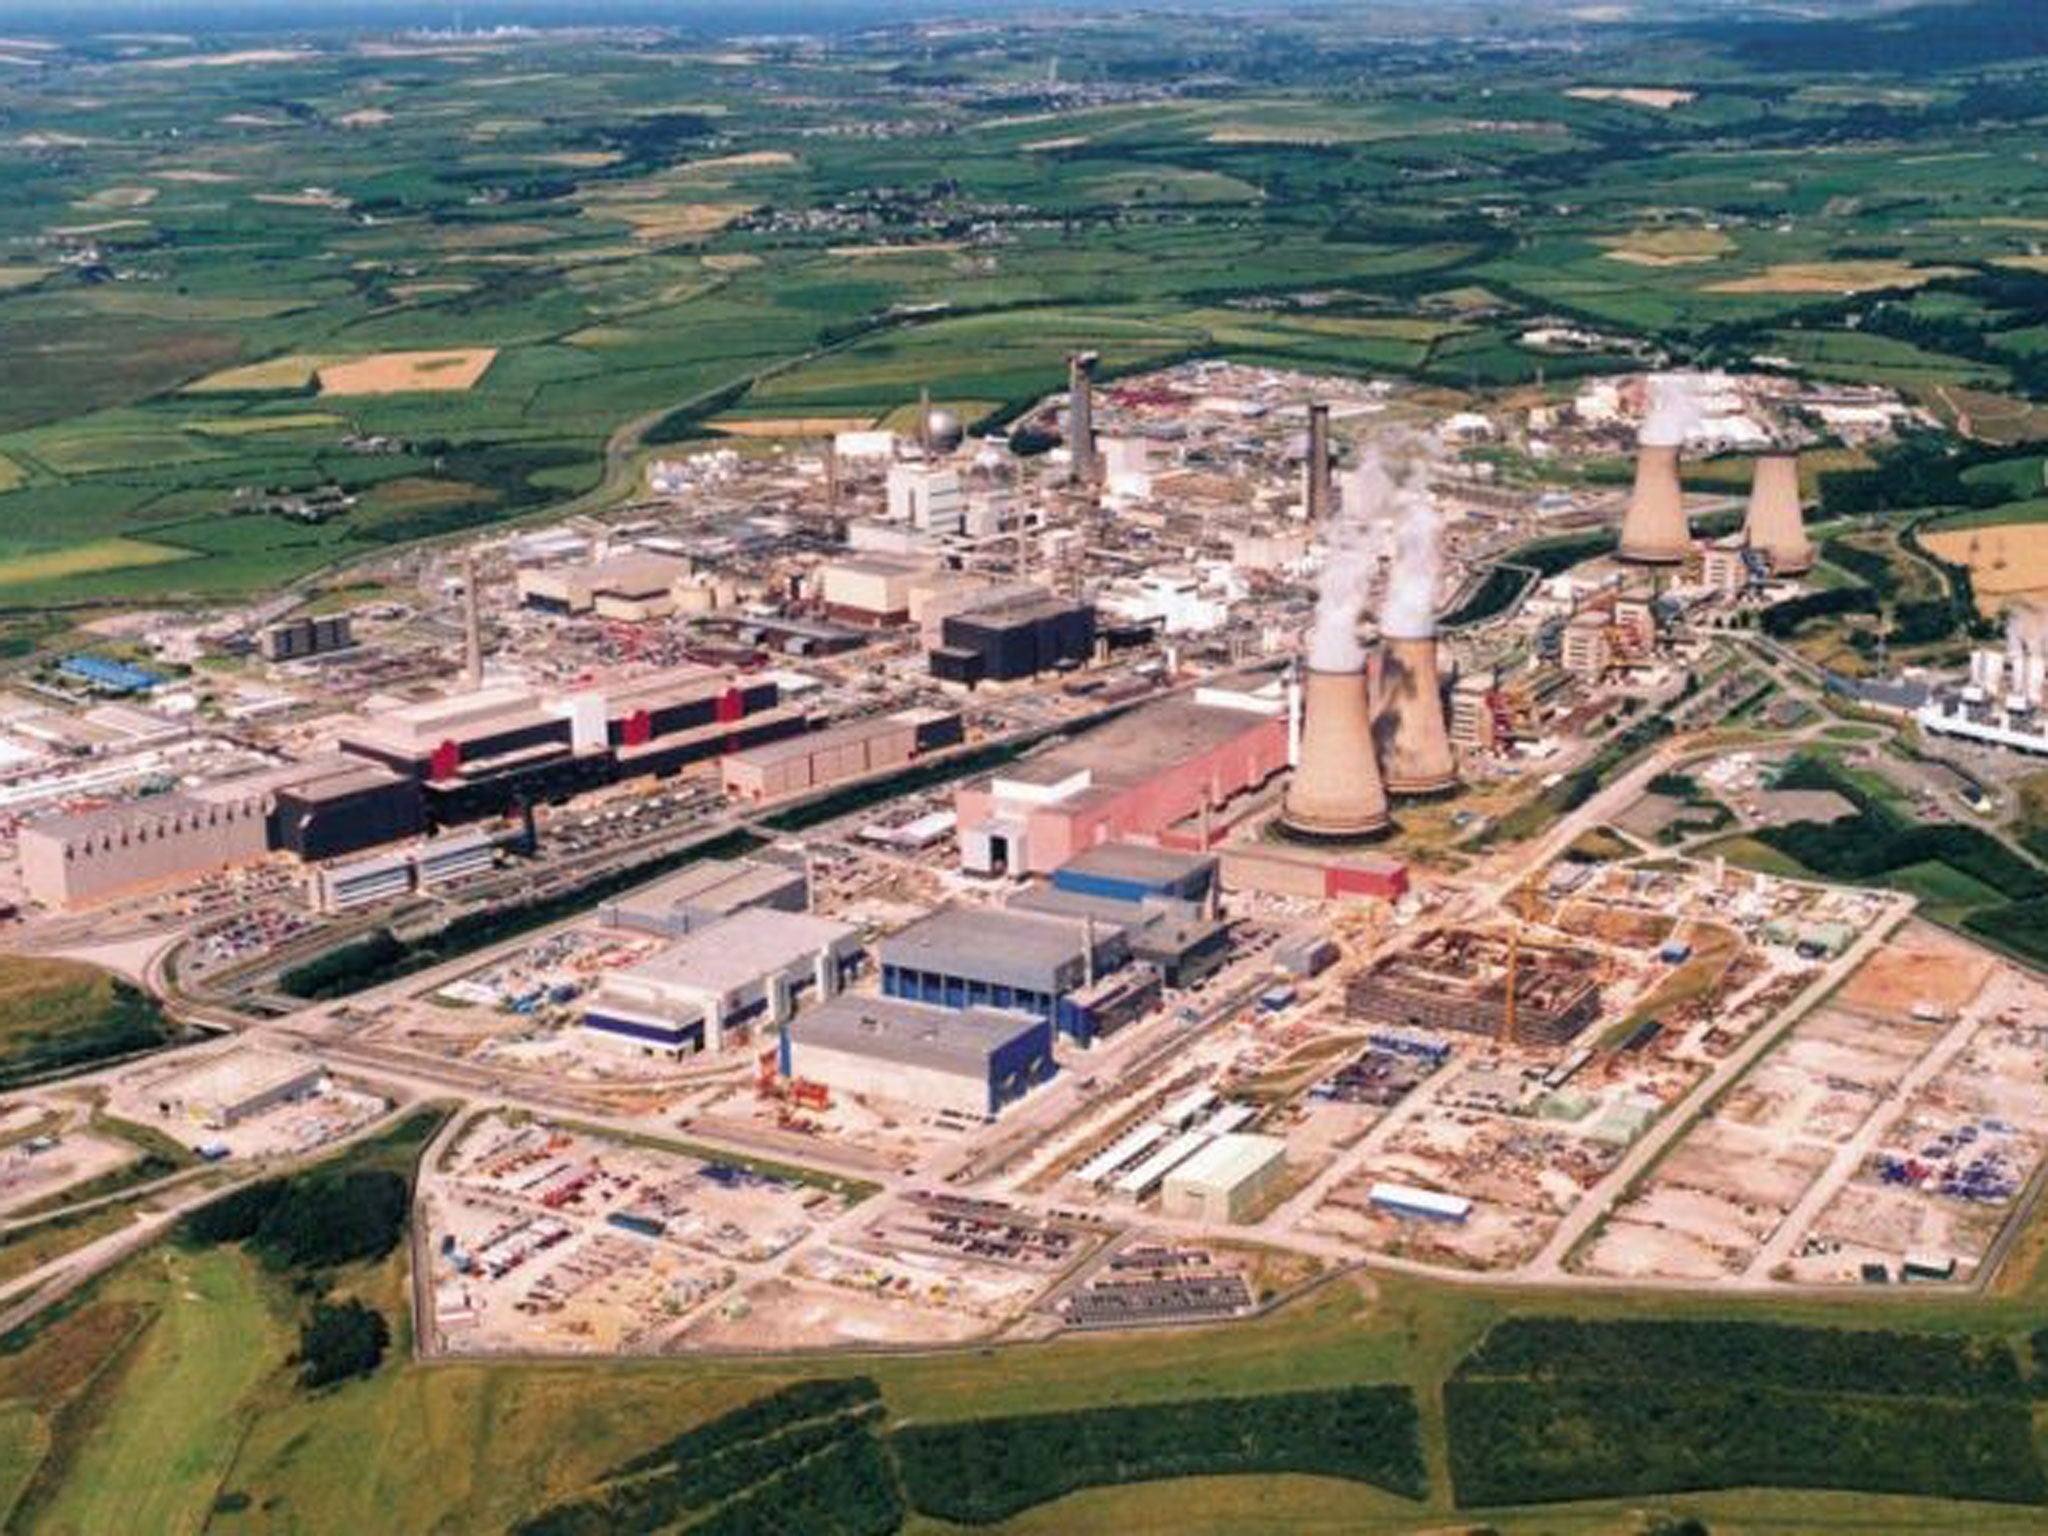 Sellafield nuclear plant in Cumbria